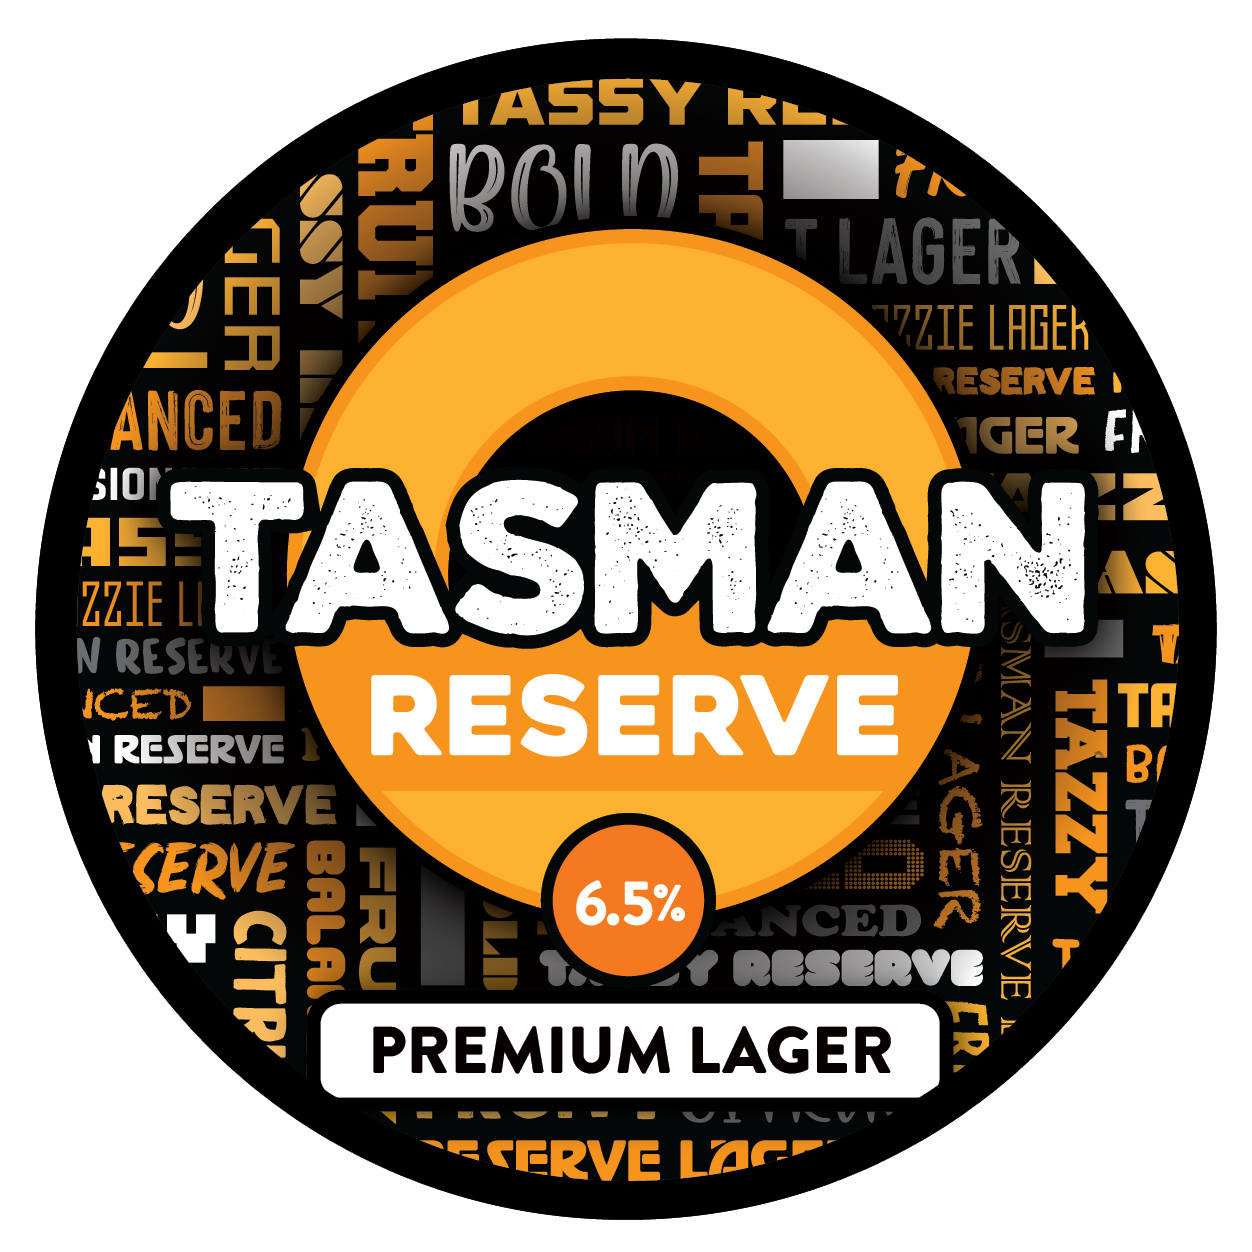 The tap badge for Sprig and Fern's Tasman Reserve Premium Lager craft beer